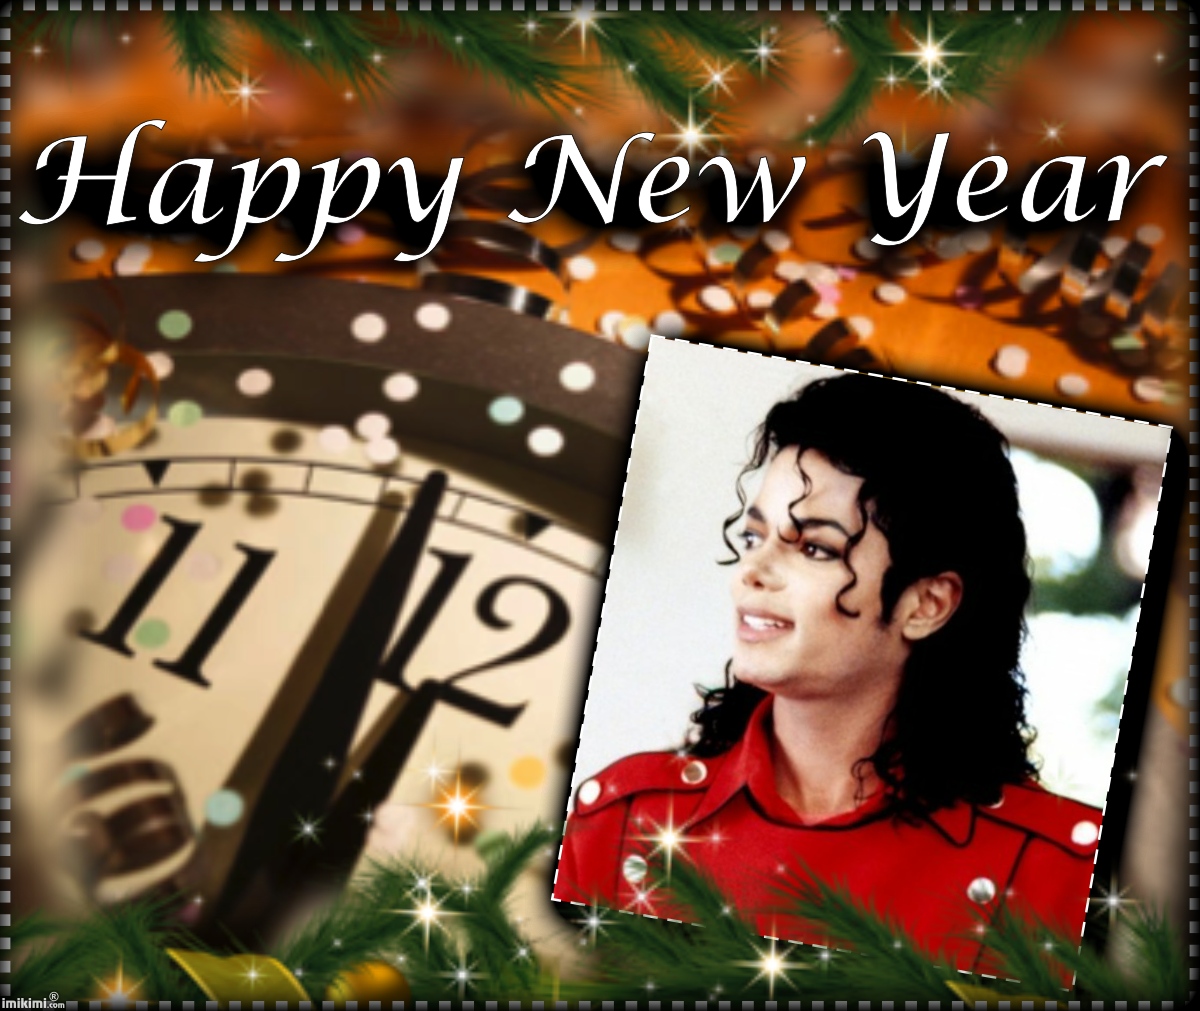 HAPPY-NEW-YEAR-MICHAEL-michael-jackson-41831548-1200-1011.jpg